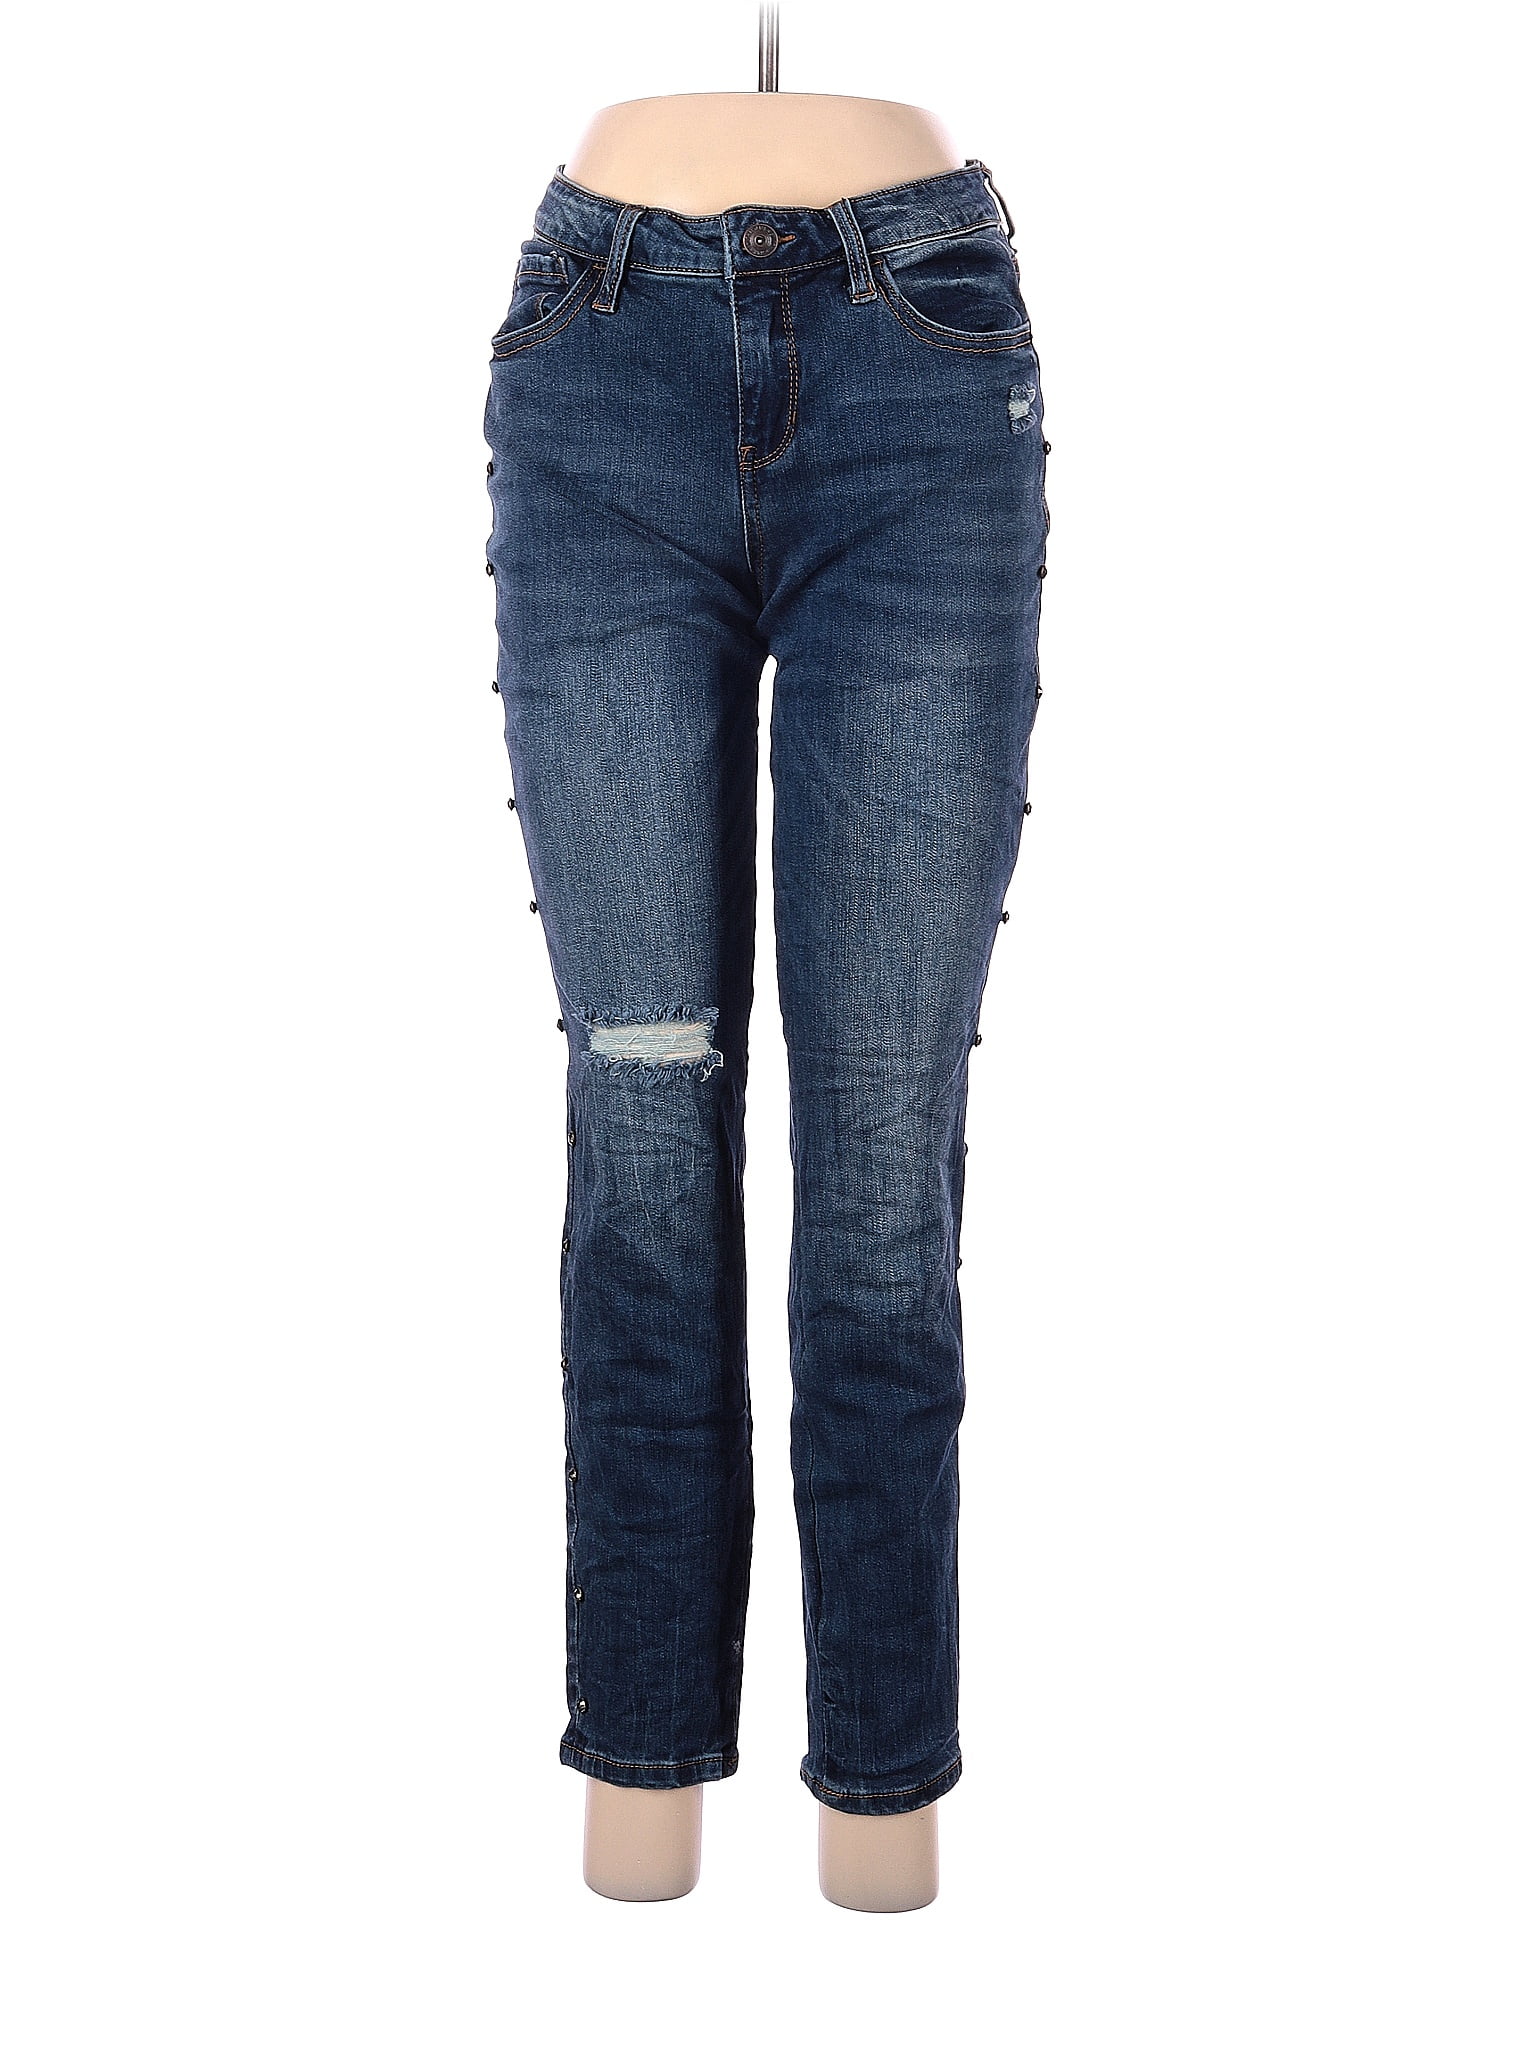 Pre-Owned STITCH STAR Women's Size 6 Jeans - Walmart.com